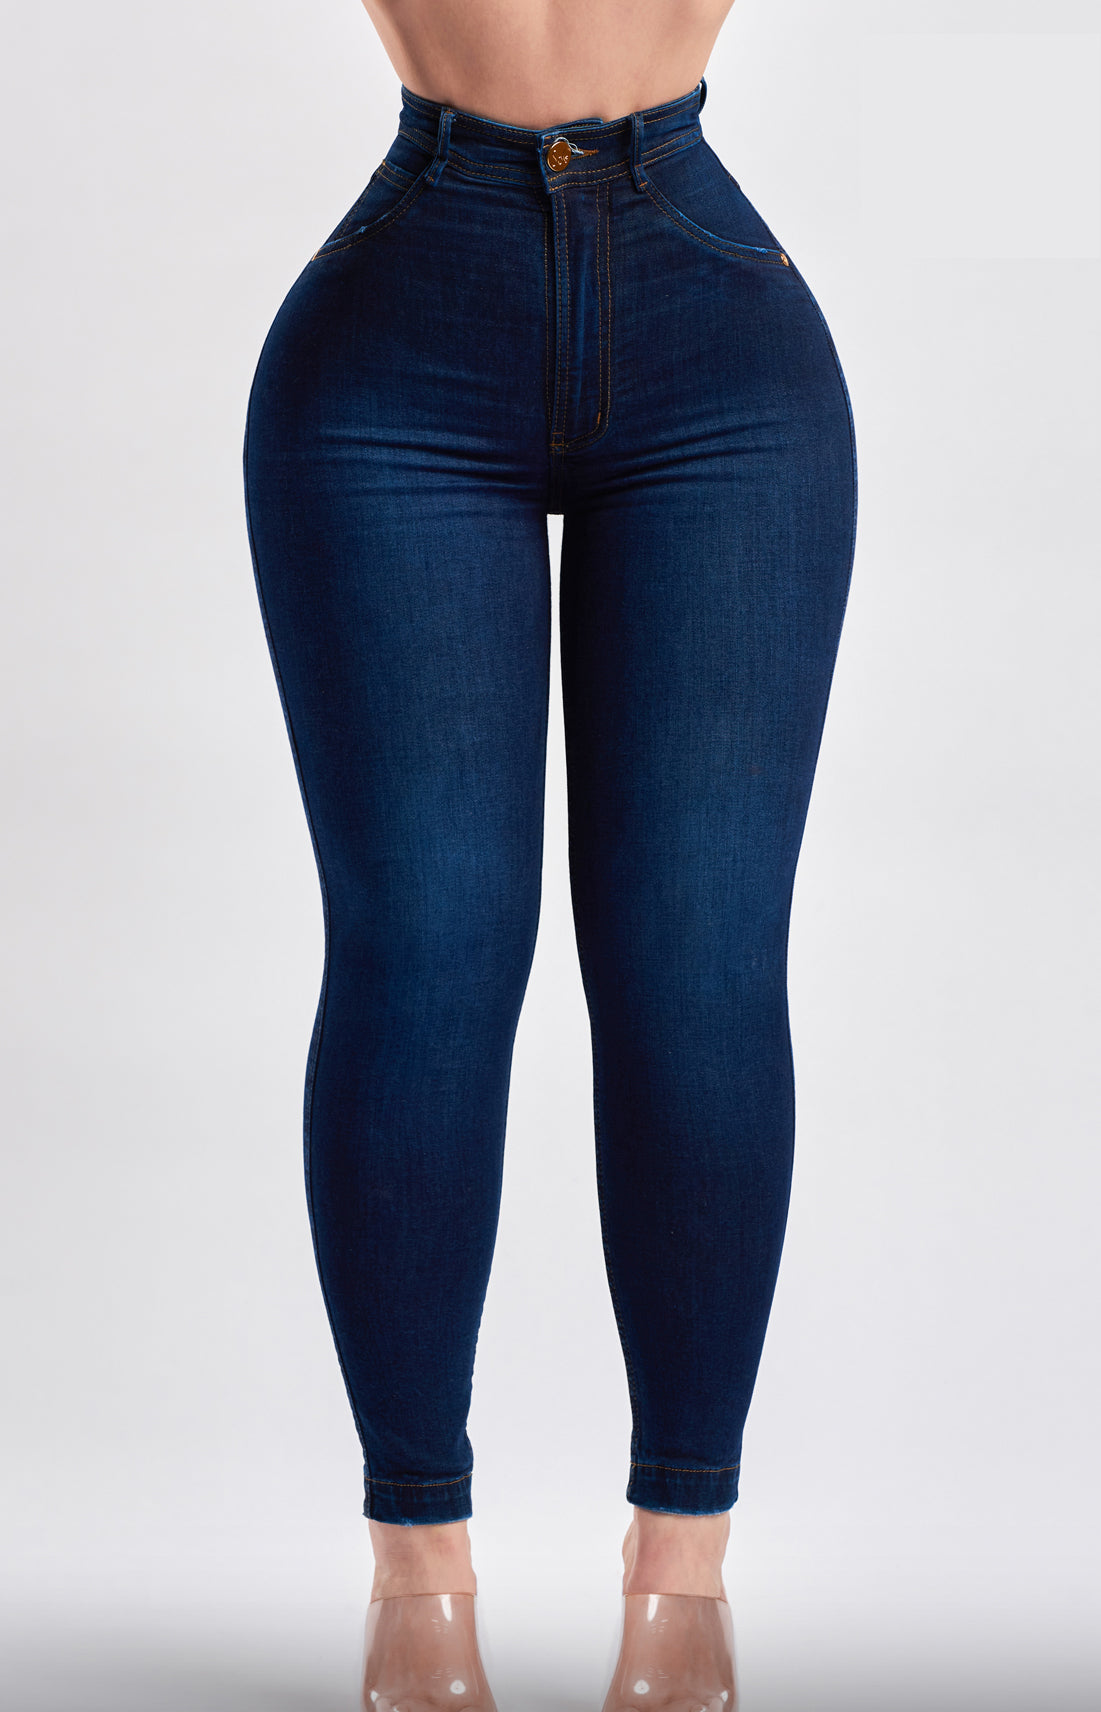 Skinny hip lifting high waist jeans